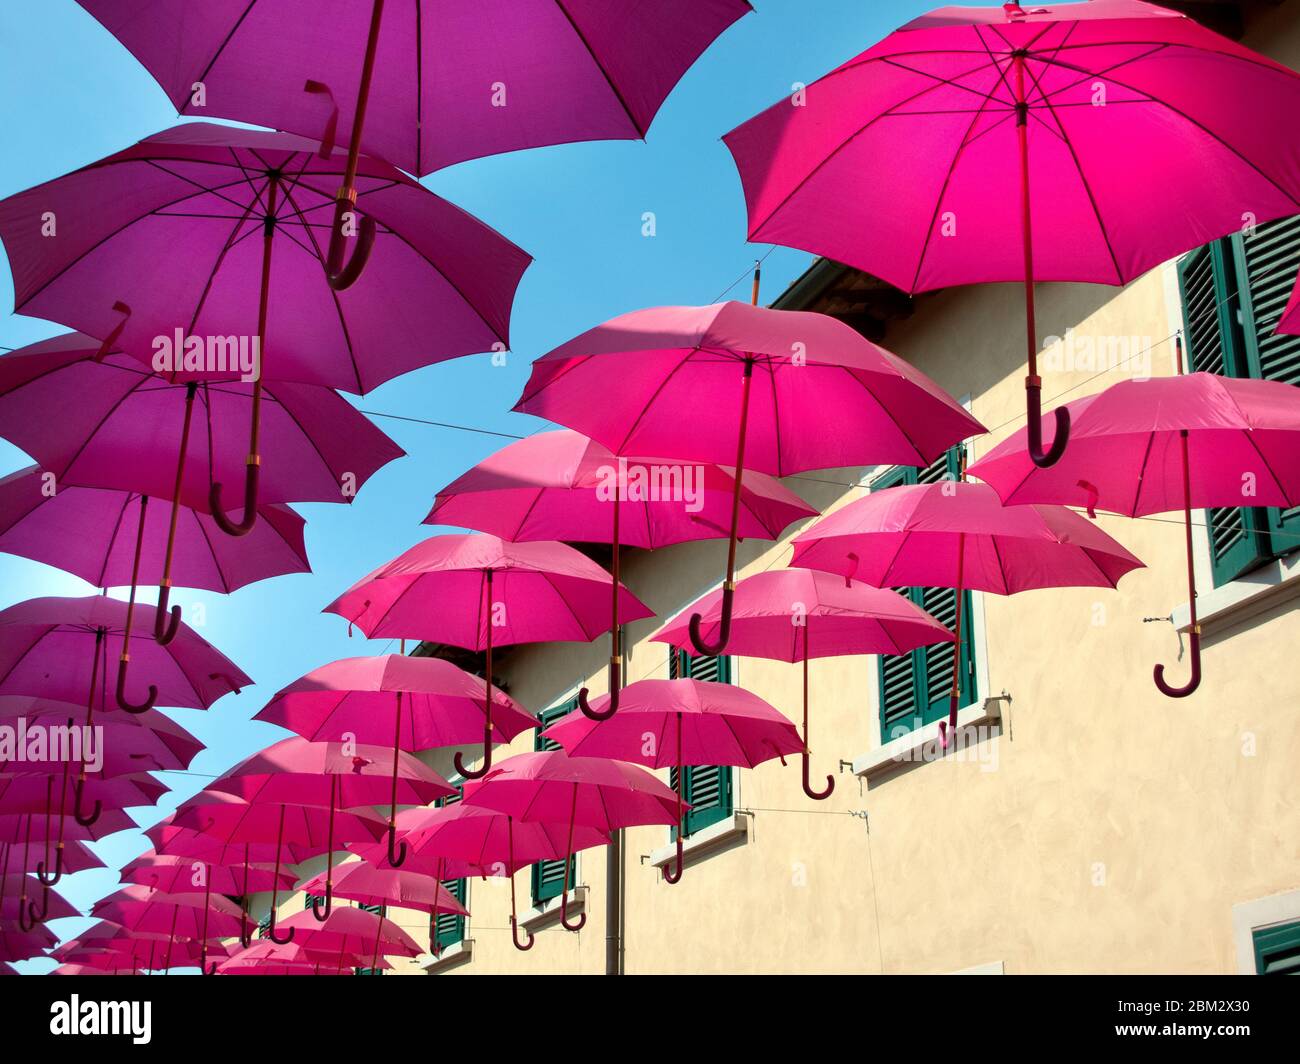 Pink umbrellas street art installation Stock Photo